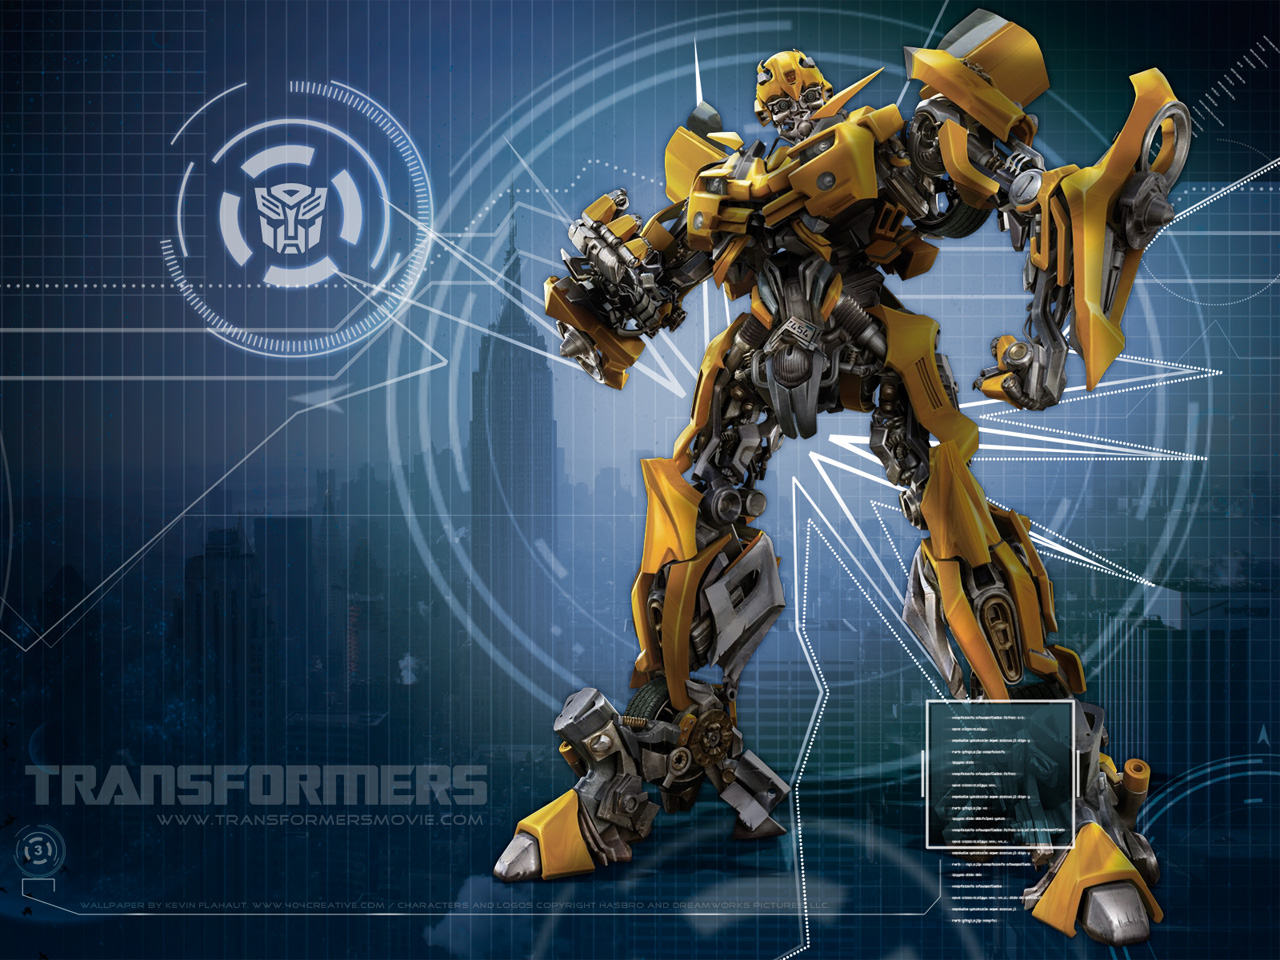 Transformers - Transformers Wallpaper (452244) - Fanpop